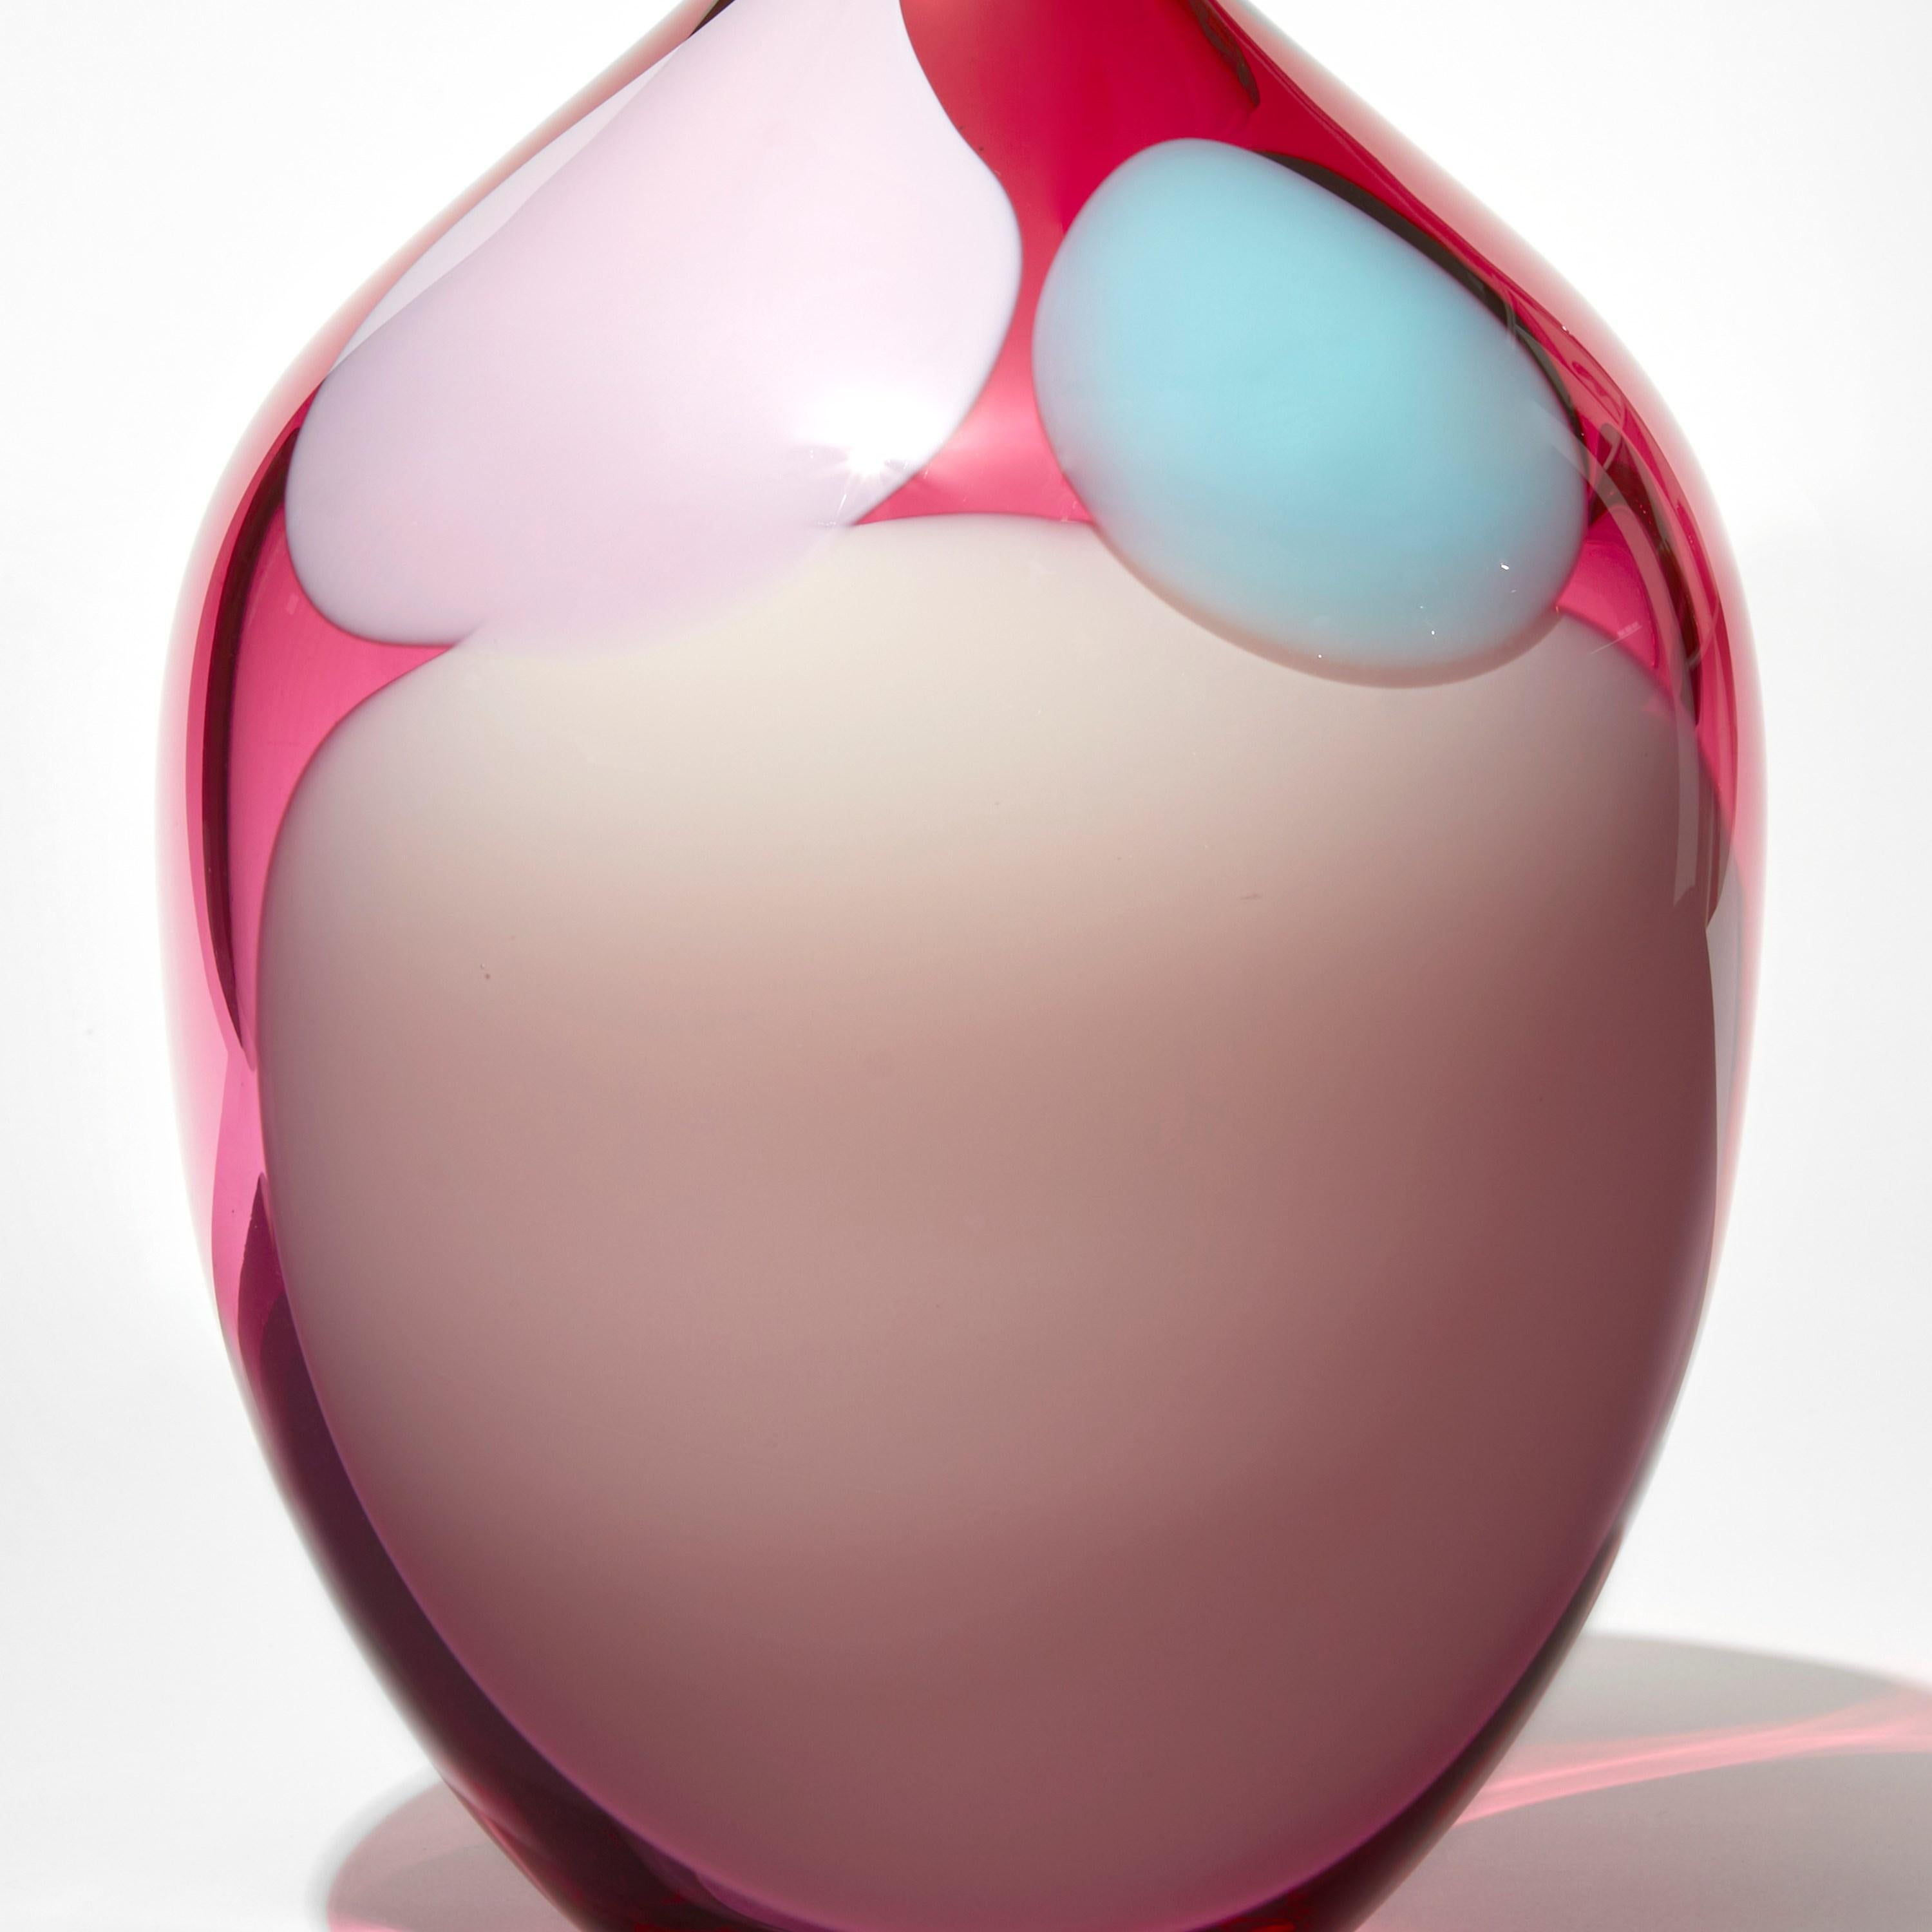 Organic Modern Coronilla Pink, a unique pink & aqua handblown glass sculpture by Gunnel Sahlin